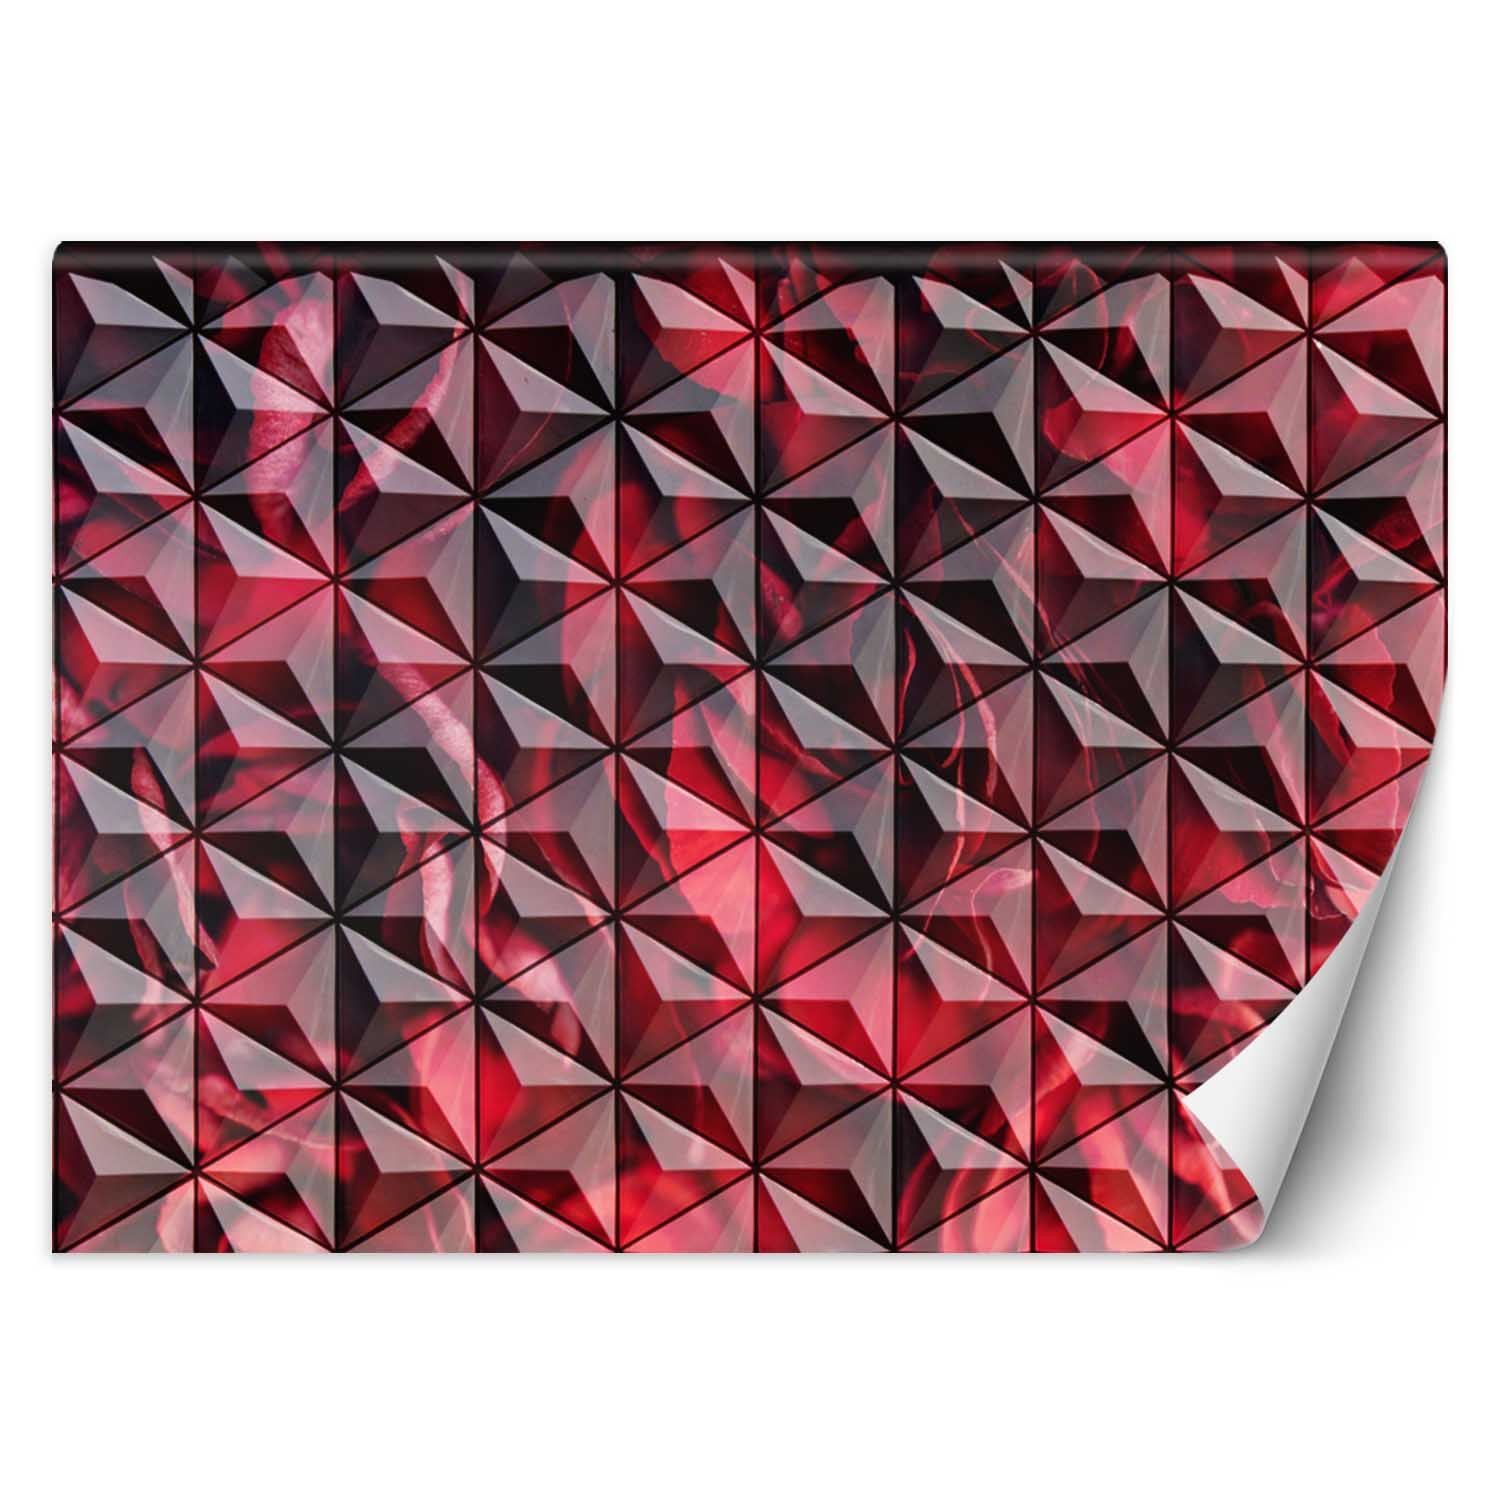 Trend24 – Behang – Rode Geometrie – Behangpapier – Behang Woonkamer – Fotobehang – 450x315x2 cm – Incl. behanglijm